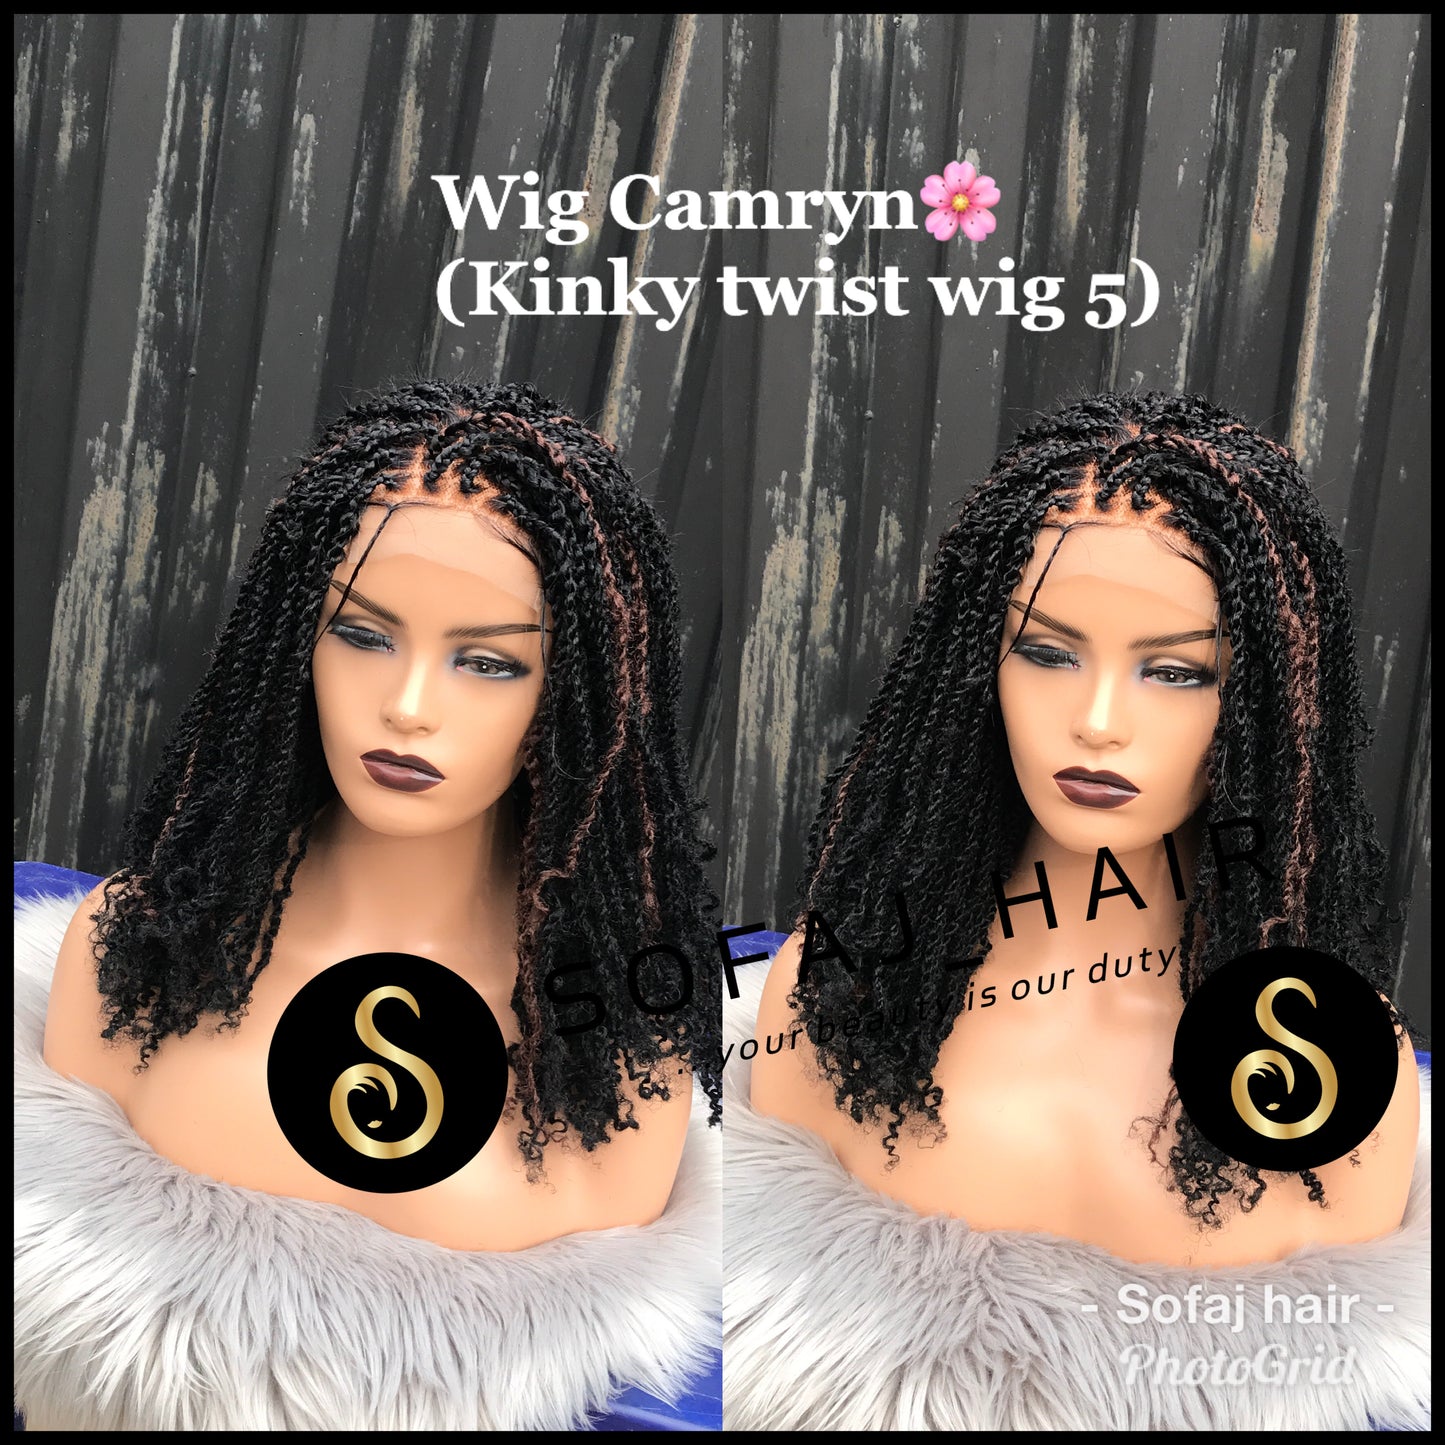 Wig Camryn. (Kinky twist wig 5)